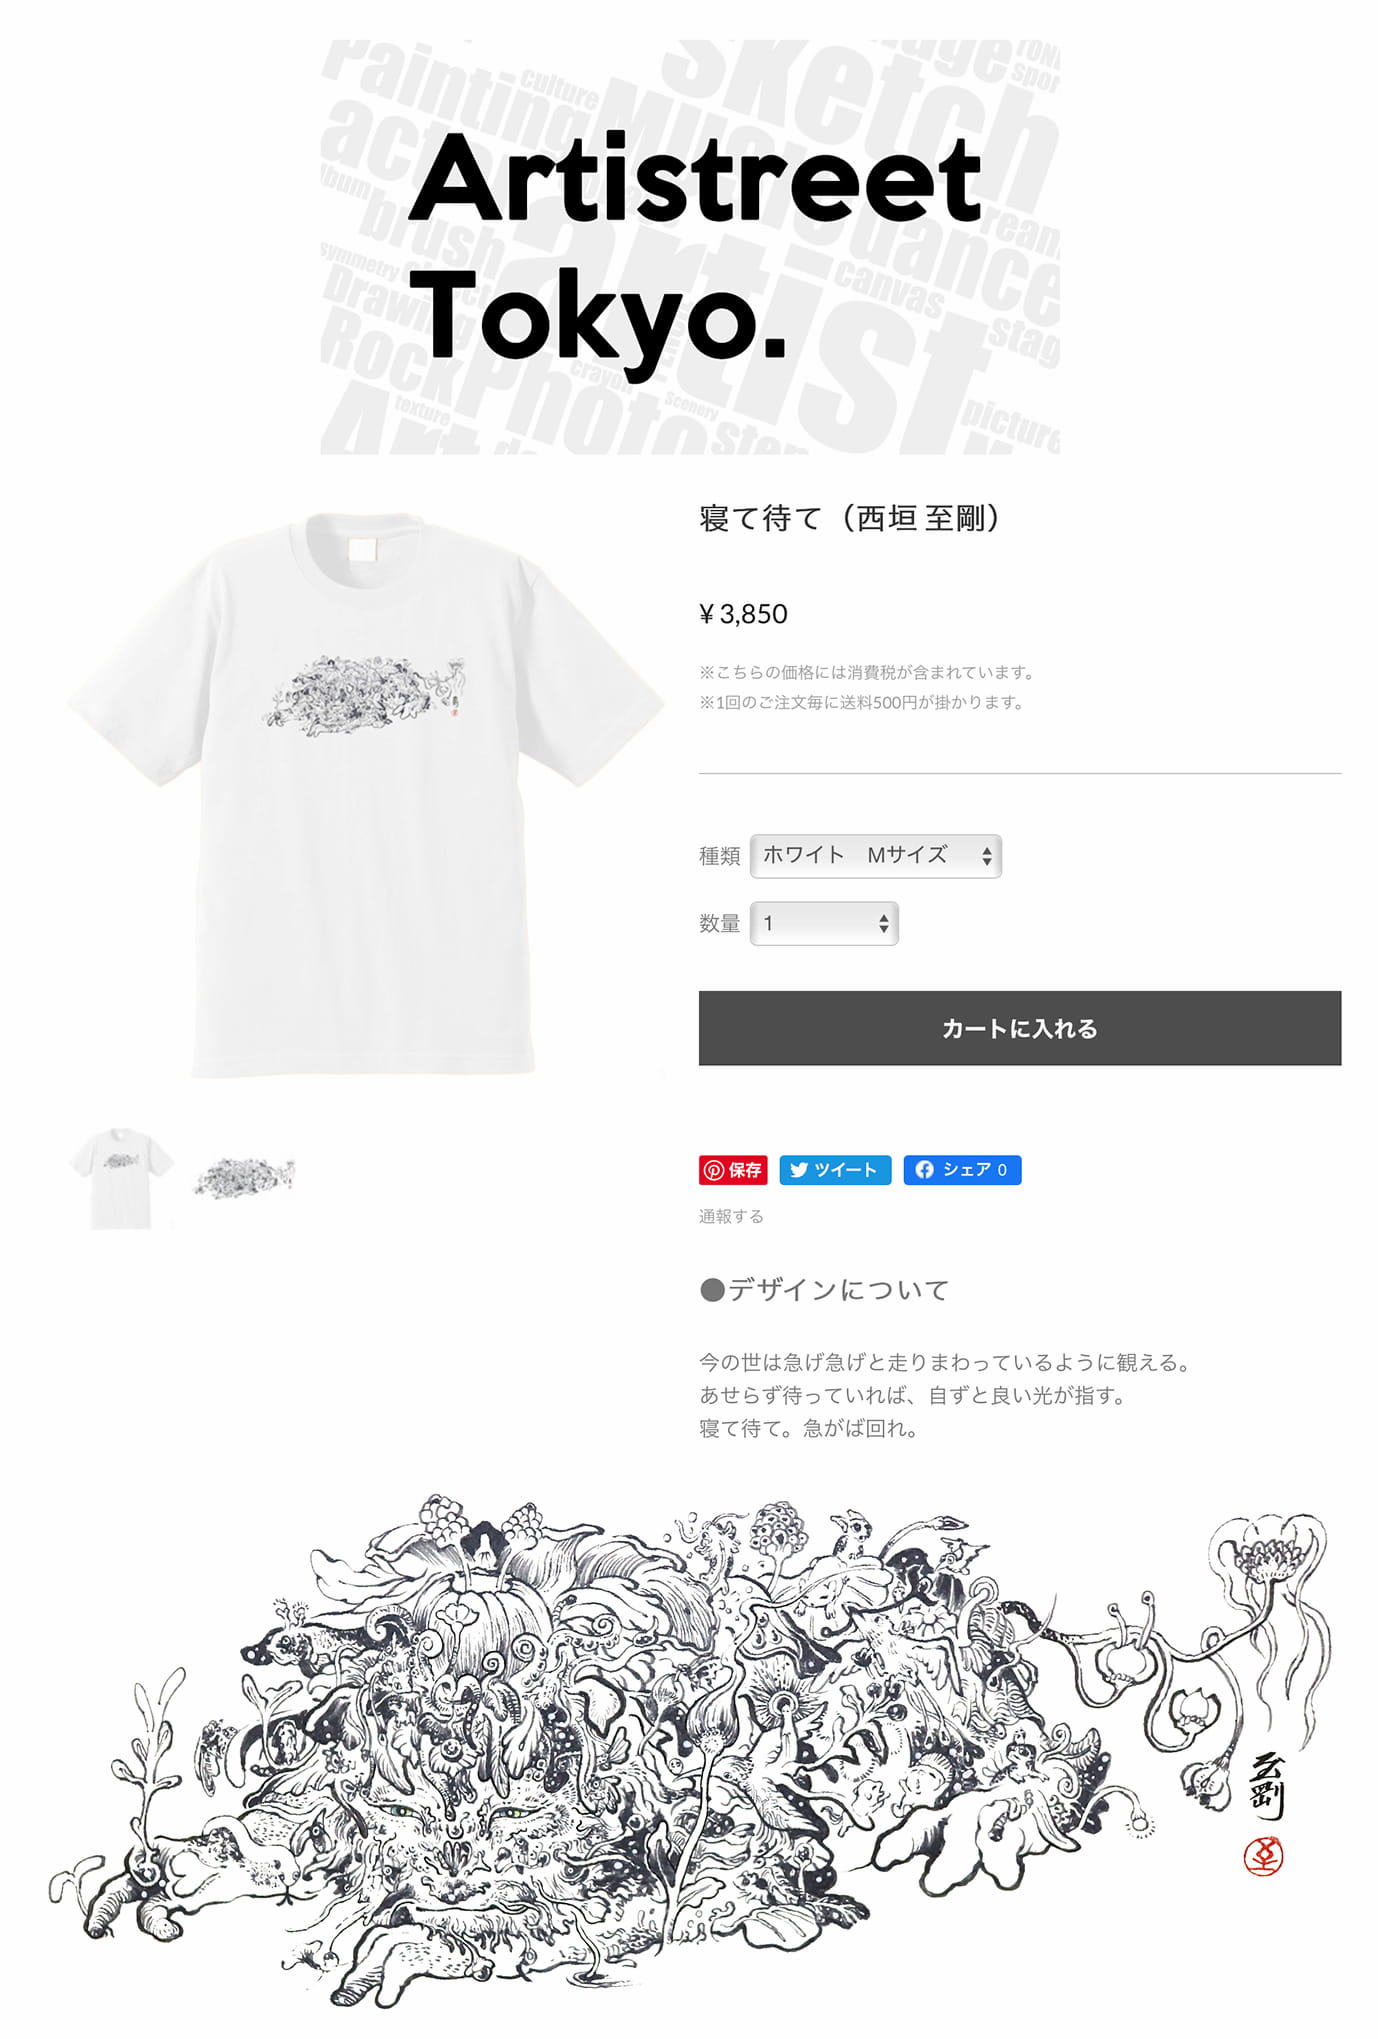 Artistreet Tokyo Tシャツ販売企画に参加しております。